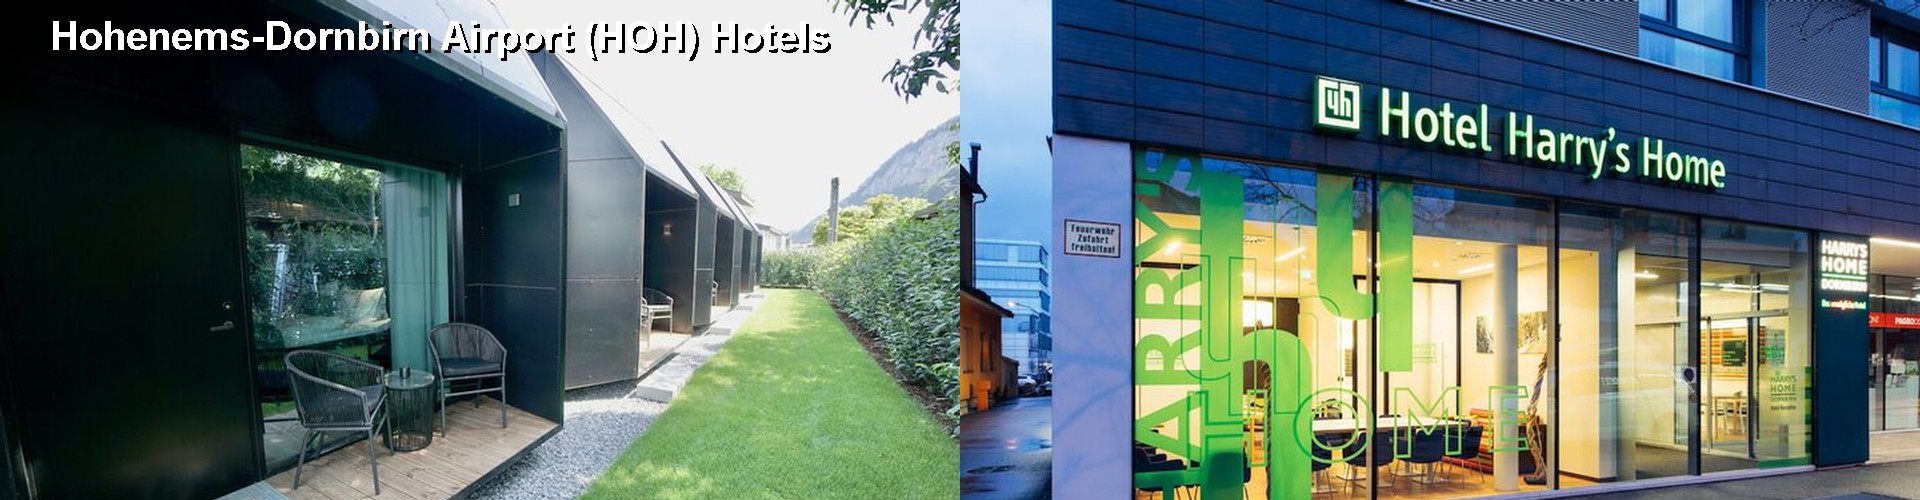 5 Best Hotels near Hohenems-Dornbirn Airport (HOH)